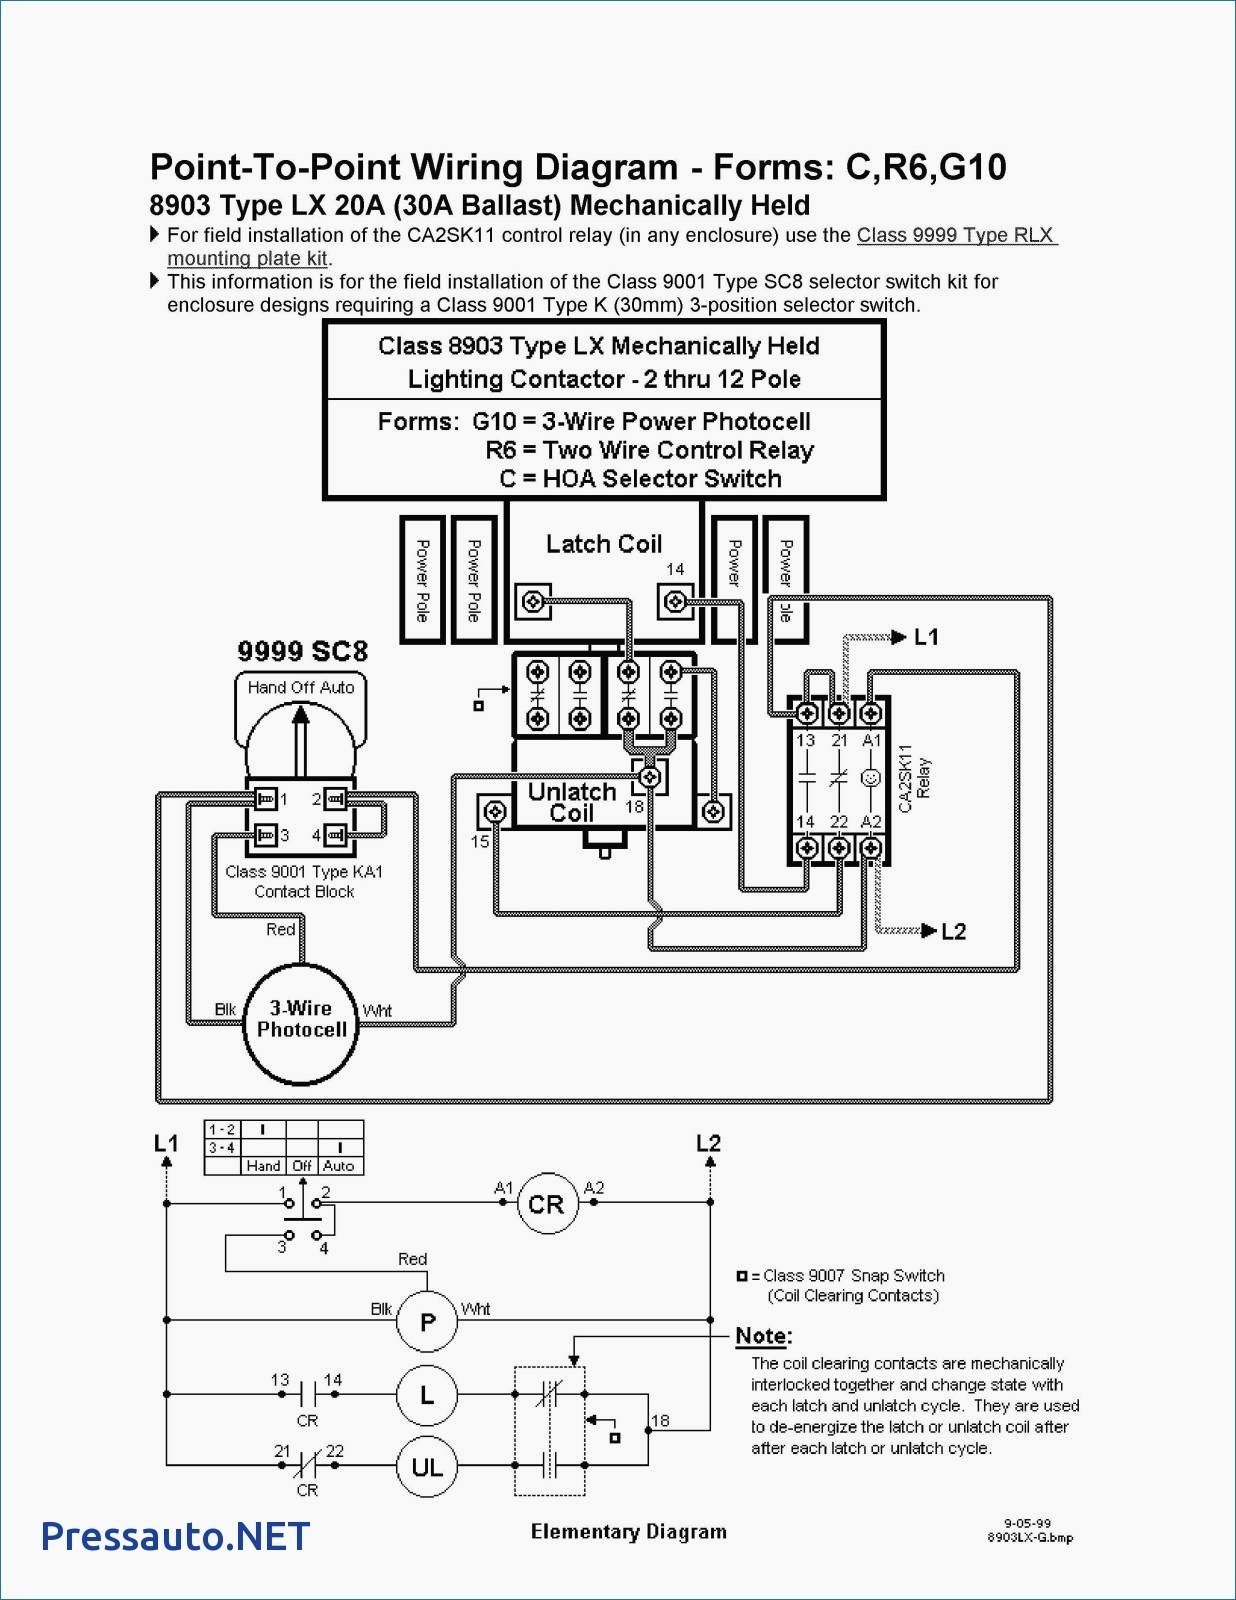 Mechanically Held Lighting Contactor Wiring Diagram asco 918 Lighting Contactor Wiring Diagram 1 at Of Mechanically Held Lighting Contactor Wiring Diagram